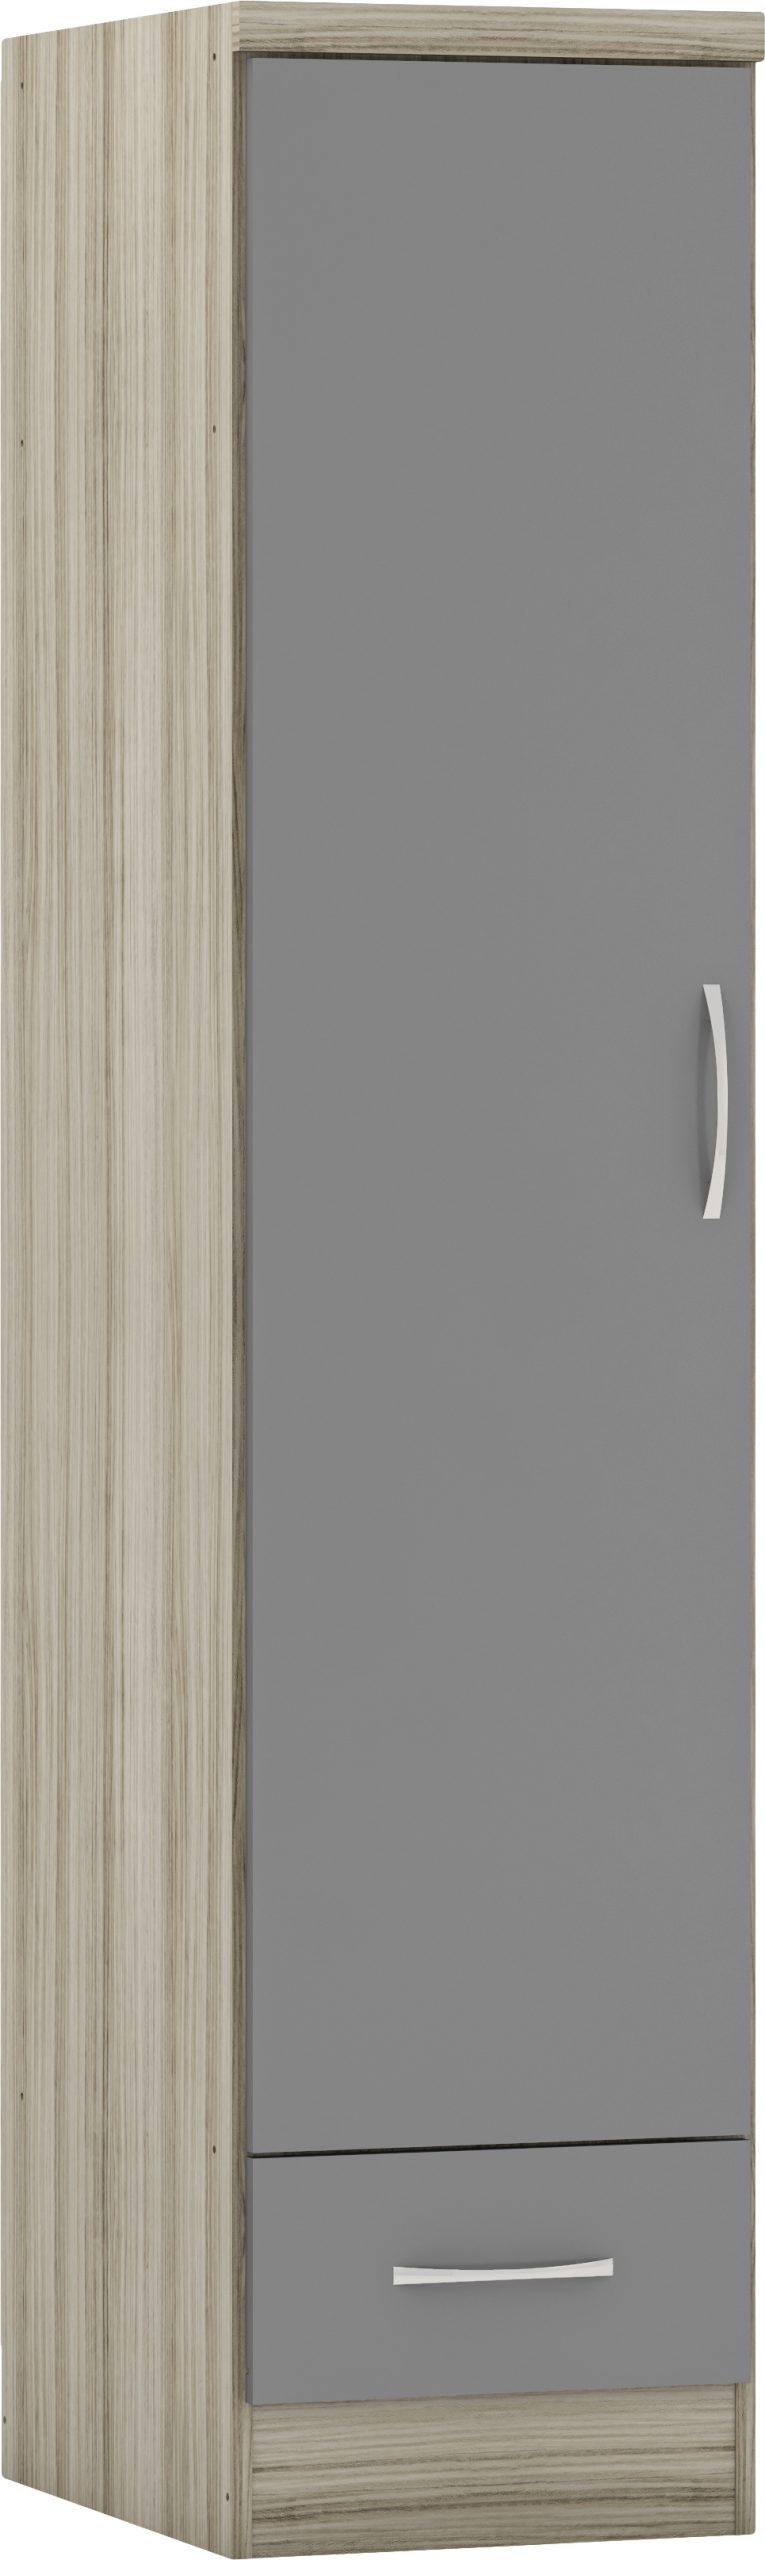 Nevada 1 Door 1 Drawer Wardrobe Grey Gloss/Light Oak Effect Veneer